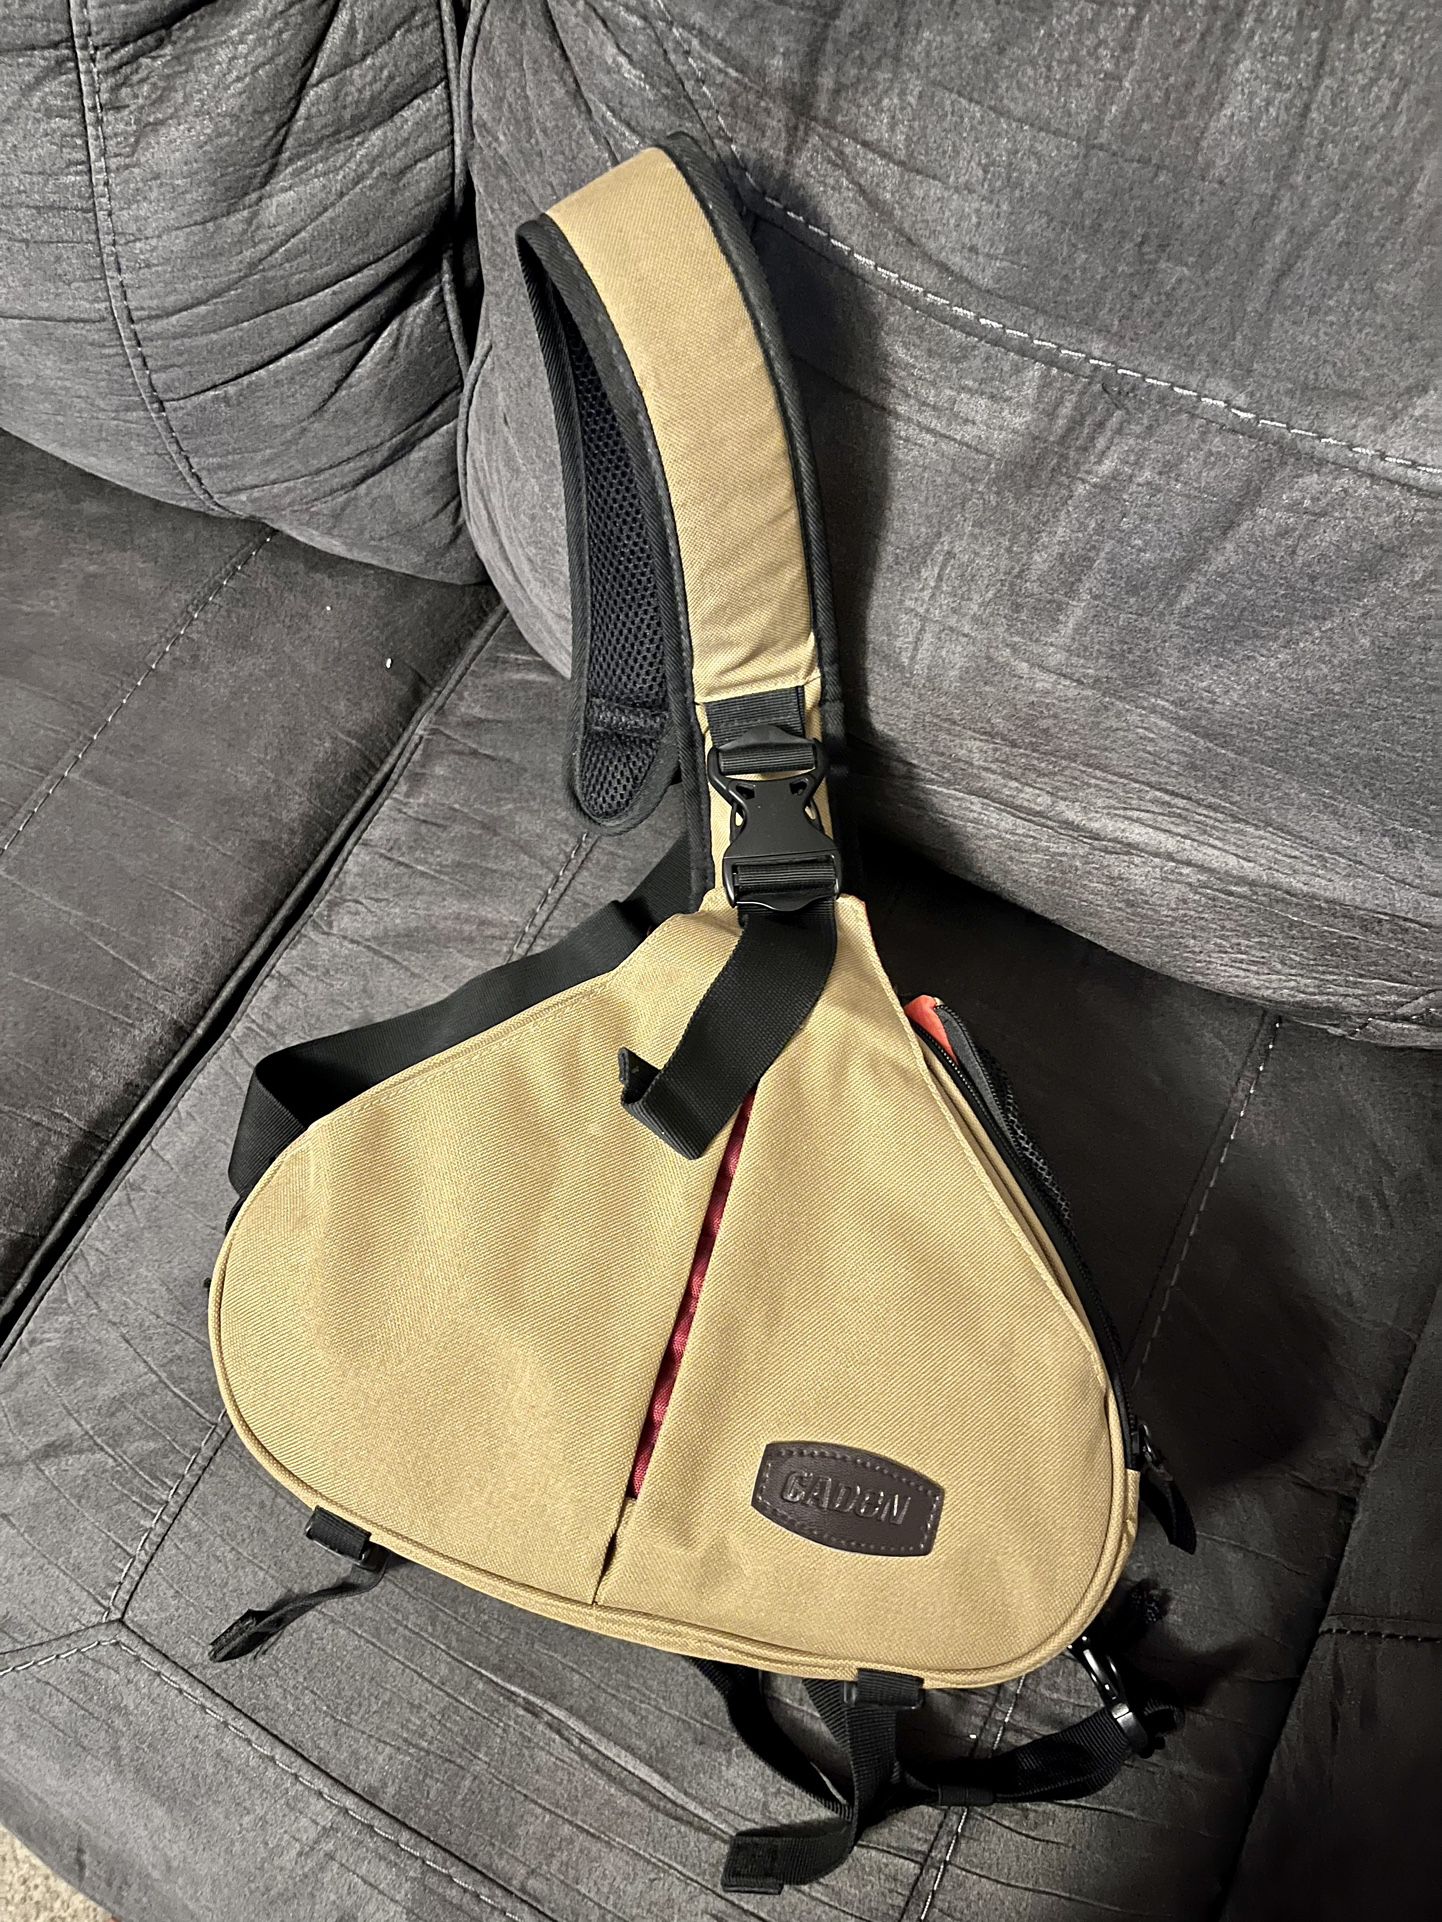 CADeN Camel Brown DSLR Camera Bag Sling Backpack Camera Case Waterproof with Rain Cover Tripod Holder